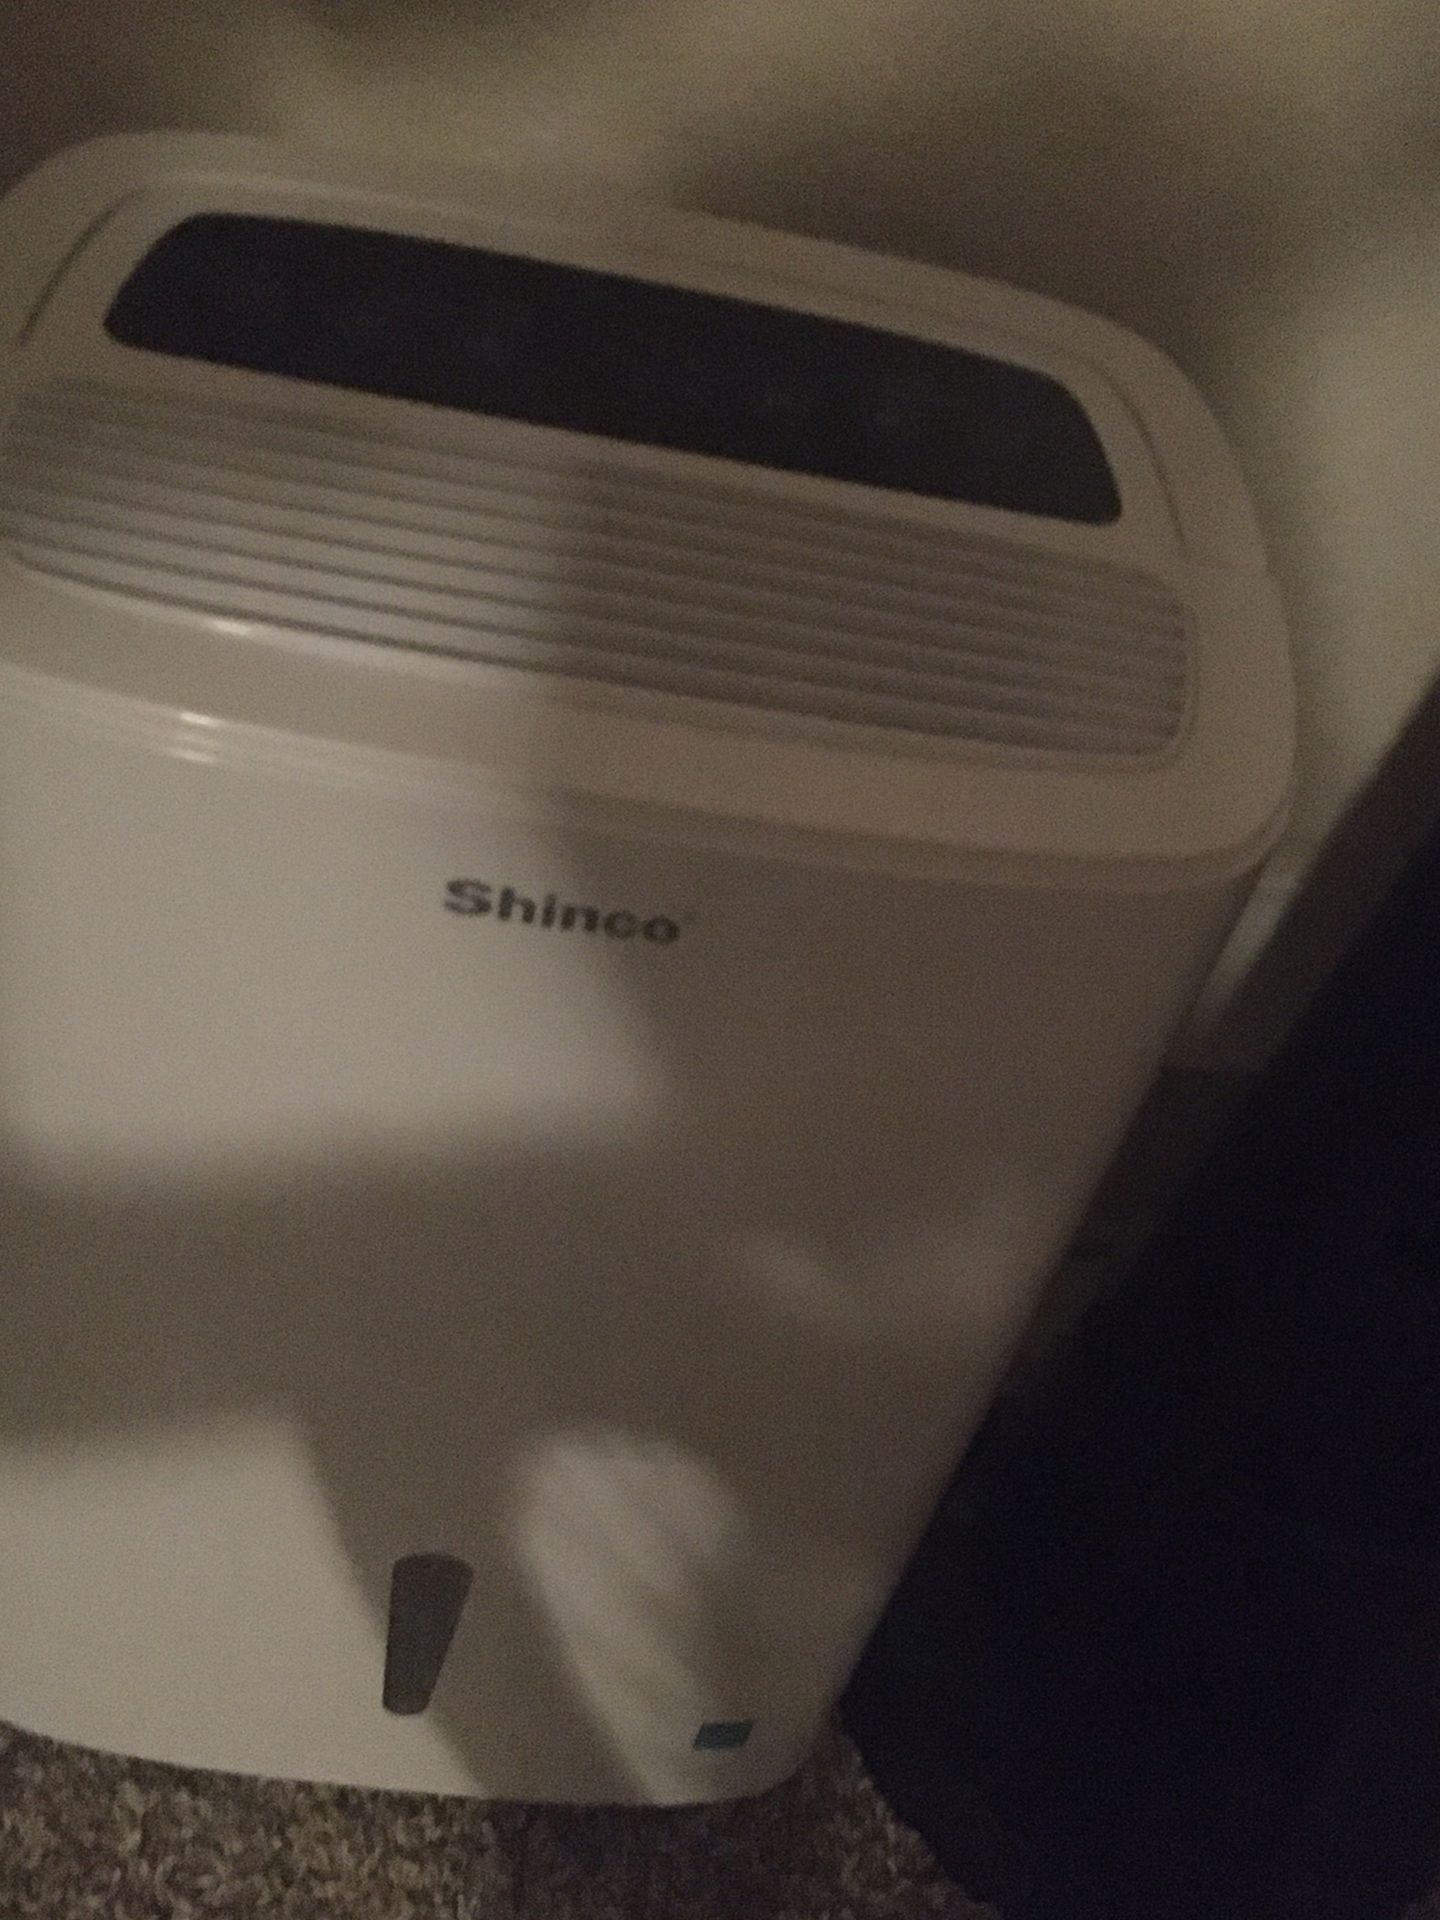 Dehumidifier (like New) Shinco